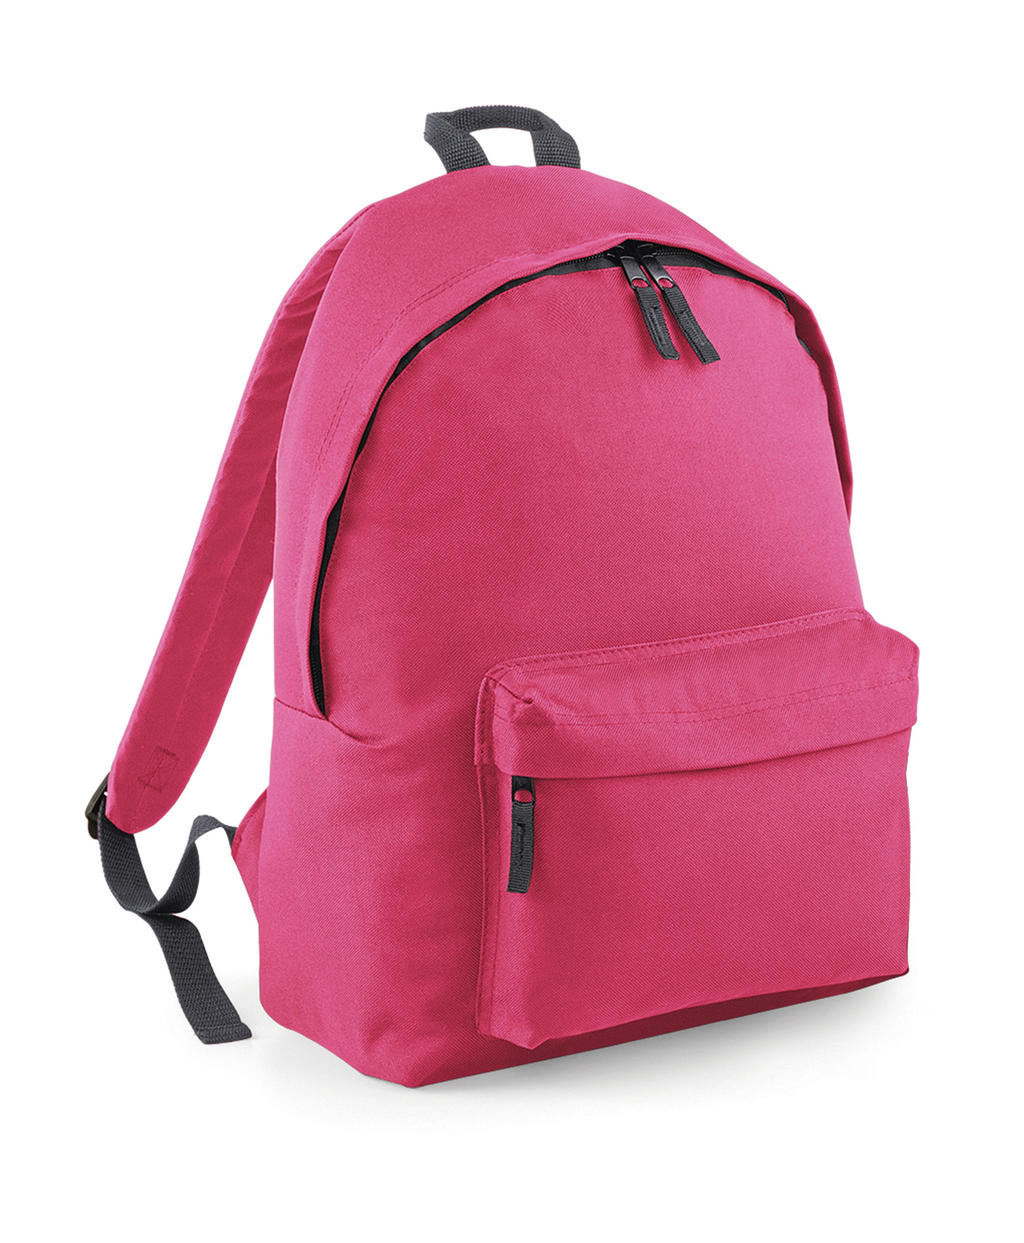  Original Fashion Backpack in Farbe True Pink/Graphite Grey